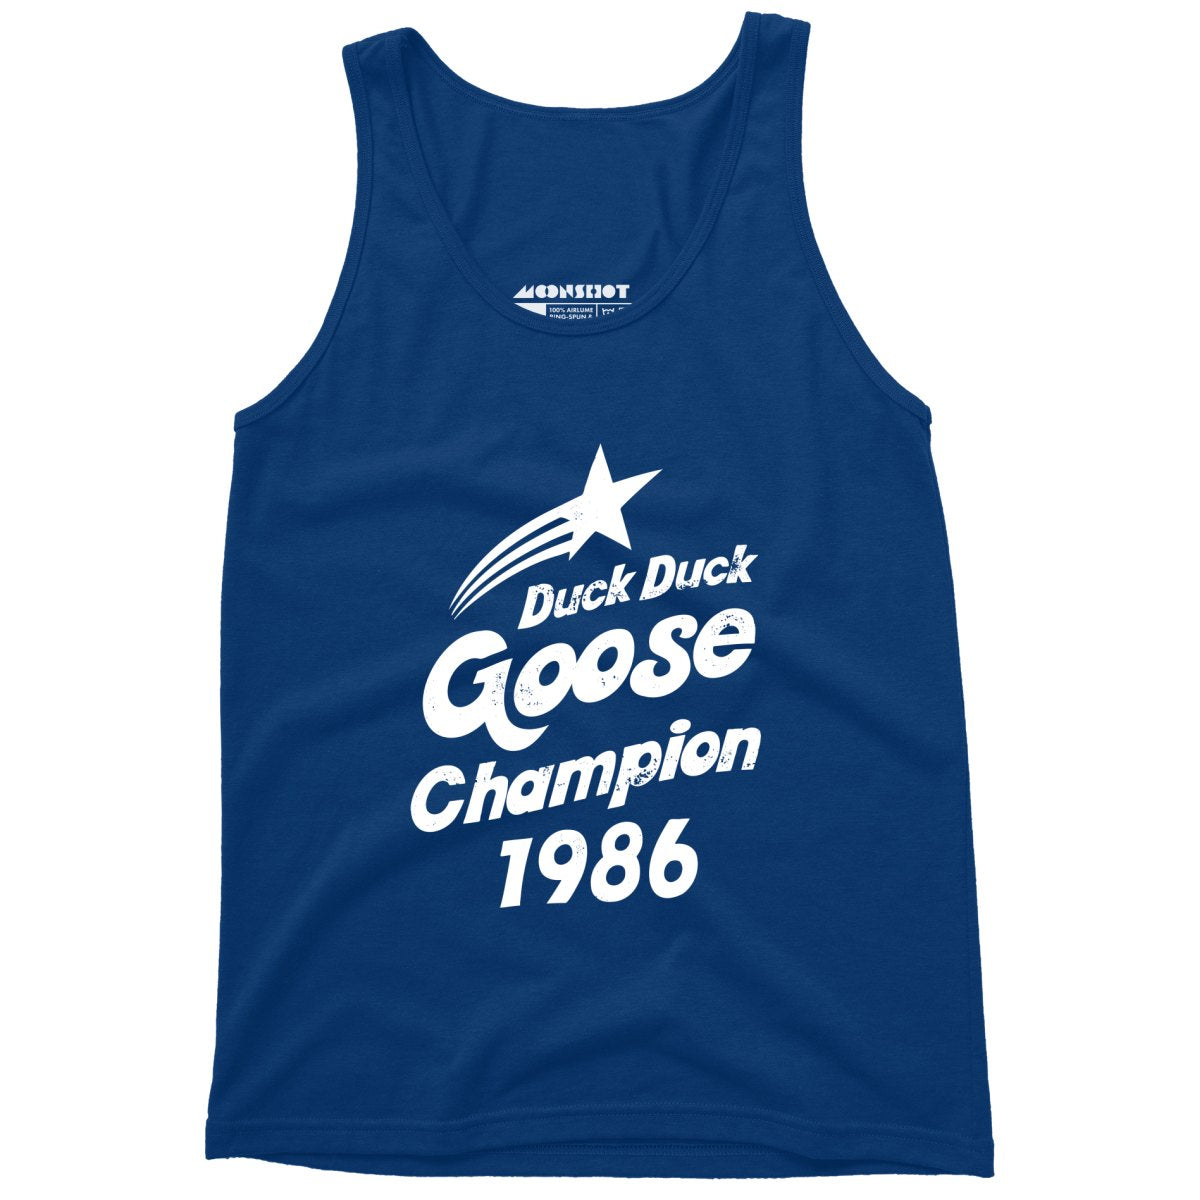 Duck Duck Goose Champion 1986 - Unisex Tank Top